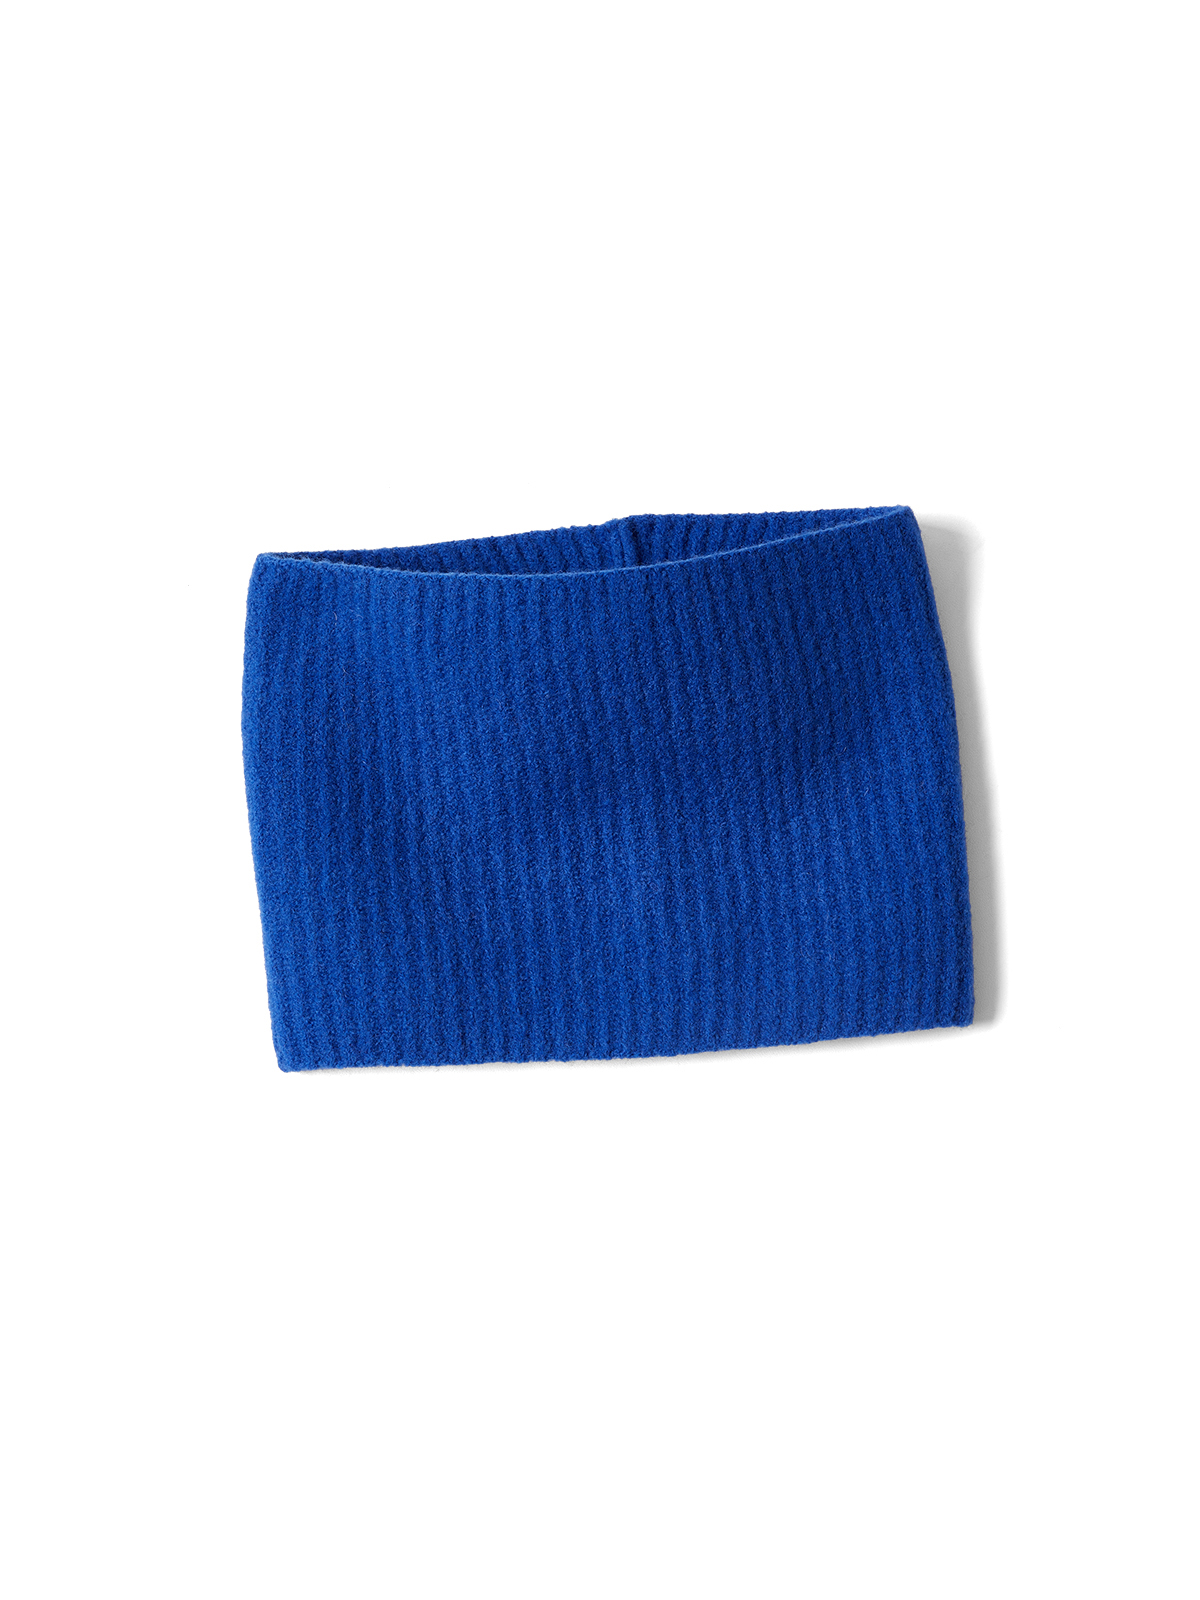 MILLED FRENCH MERINO RIB KNIT NECK WARMER (ROYAL BLUE)